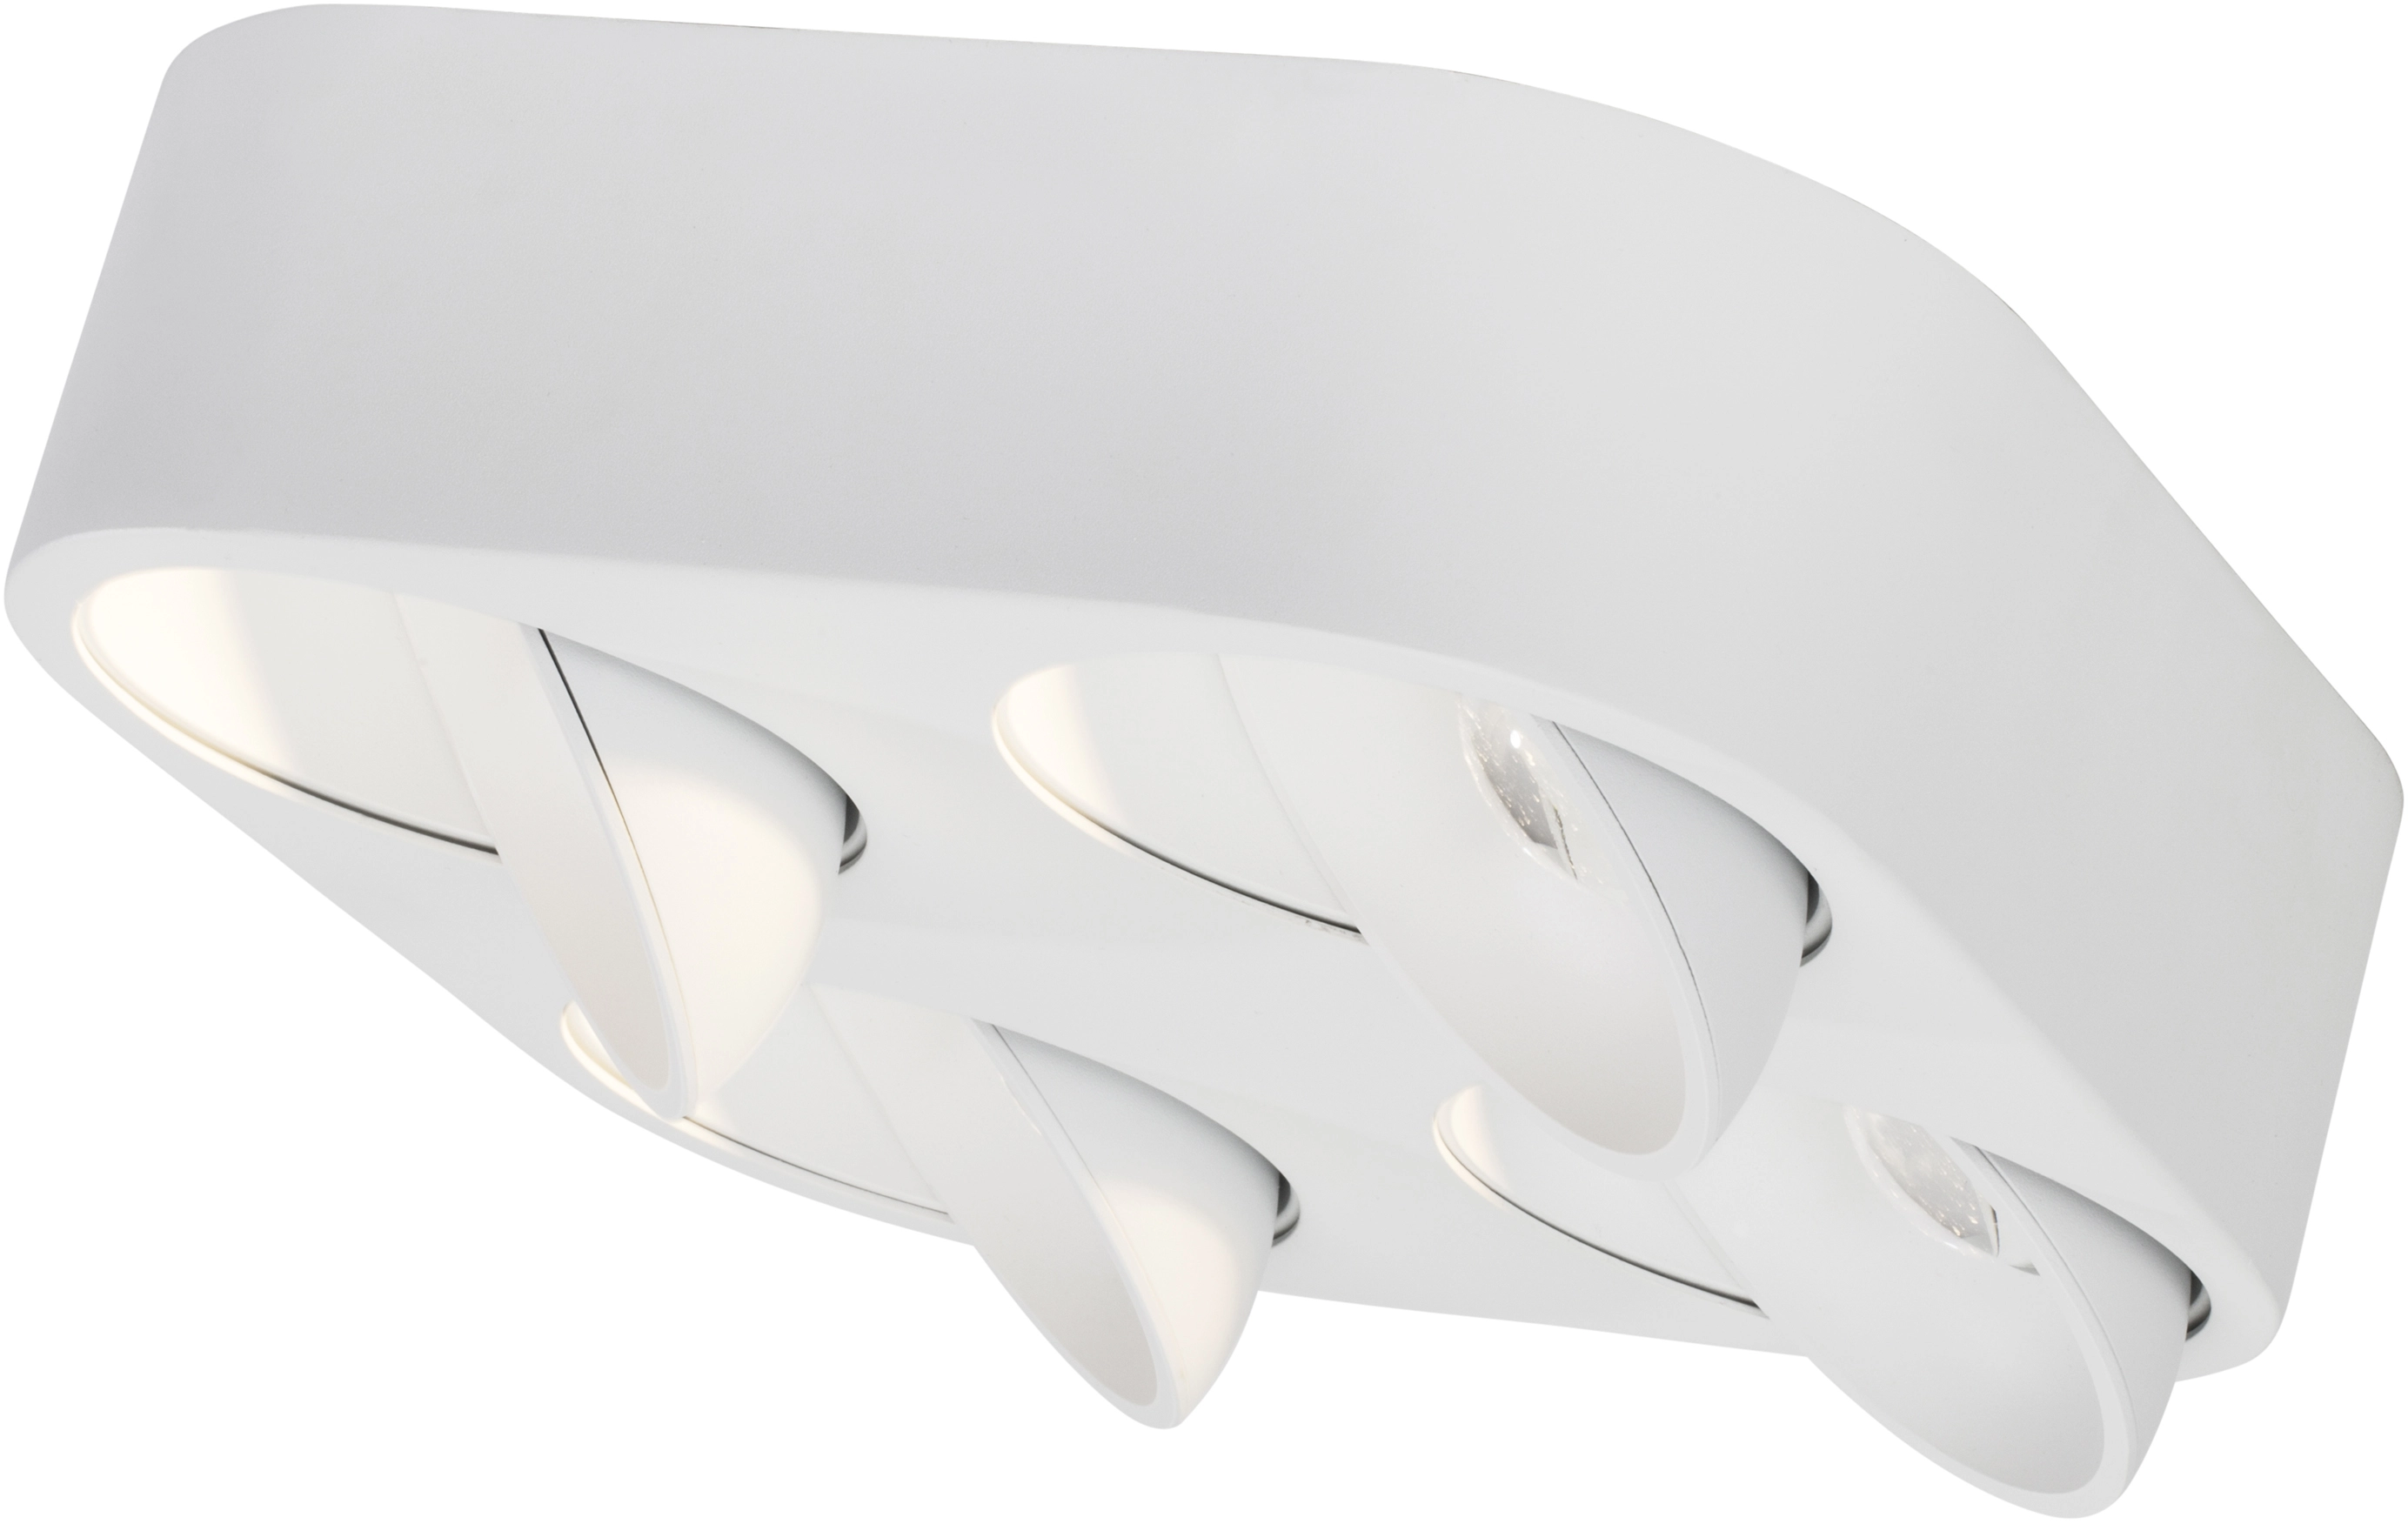 AEG LED-Spot Leca dimmbar und 7 kaufen cm OBI cm cm bei x x schwenkbar 26,3 26,3